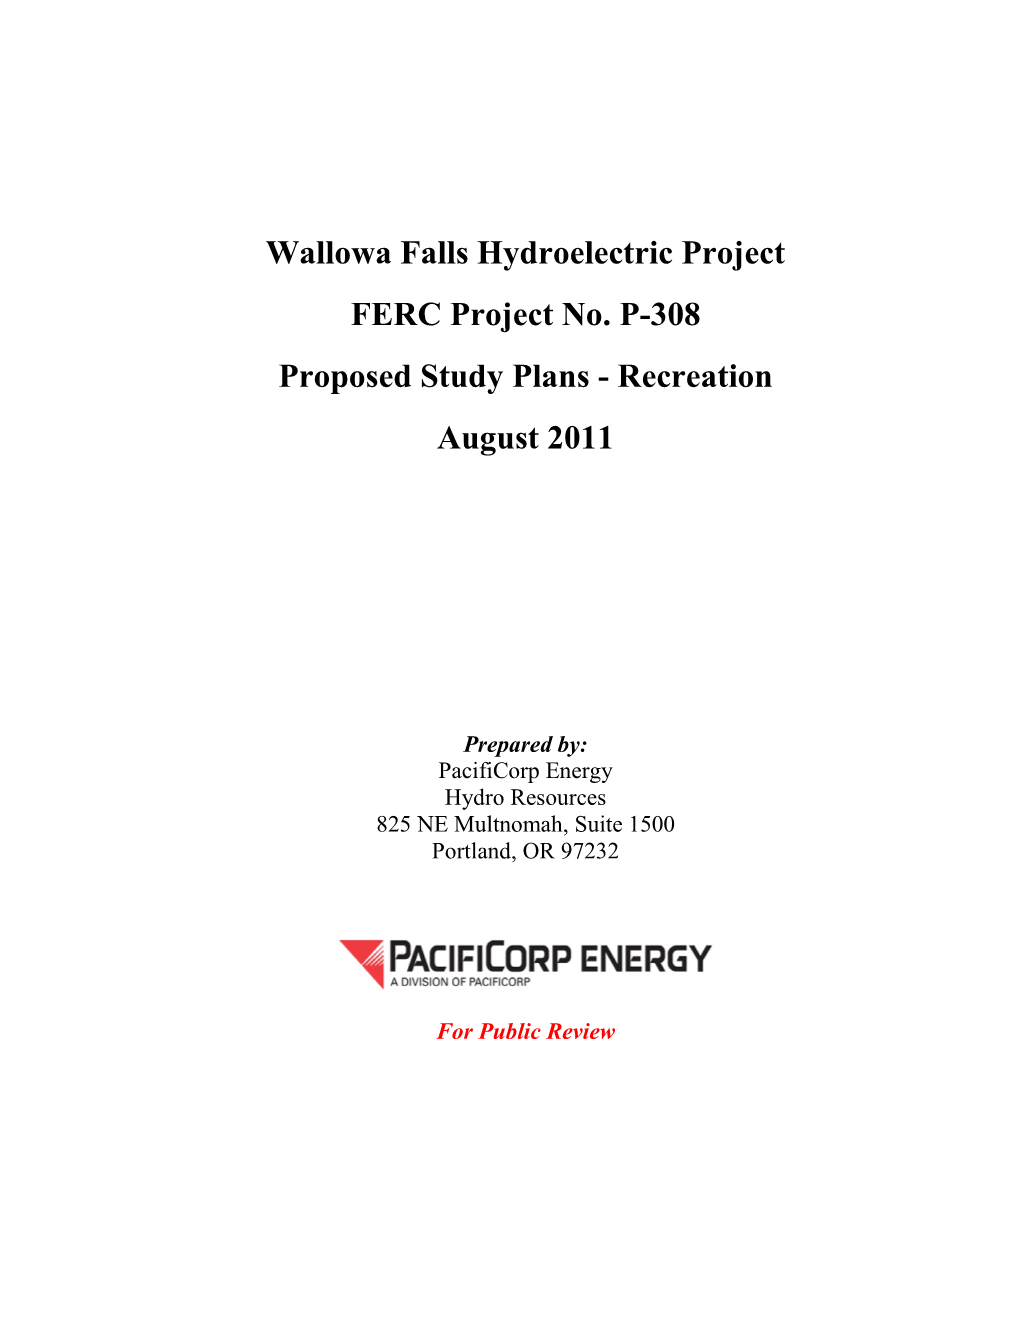 Wallowa Falls Hydroelectric Project FERC Project No